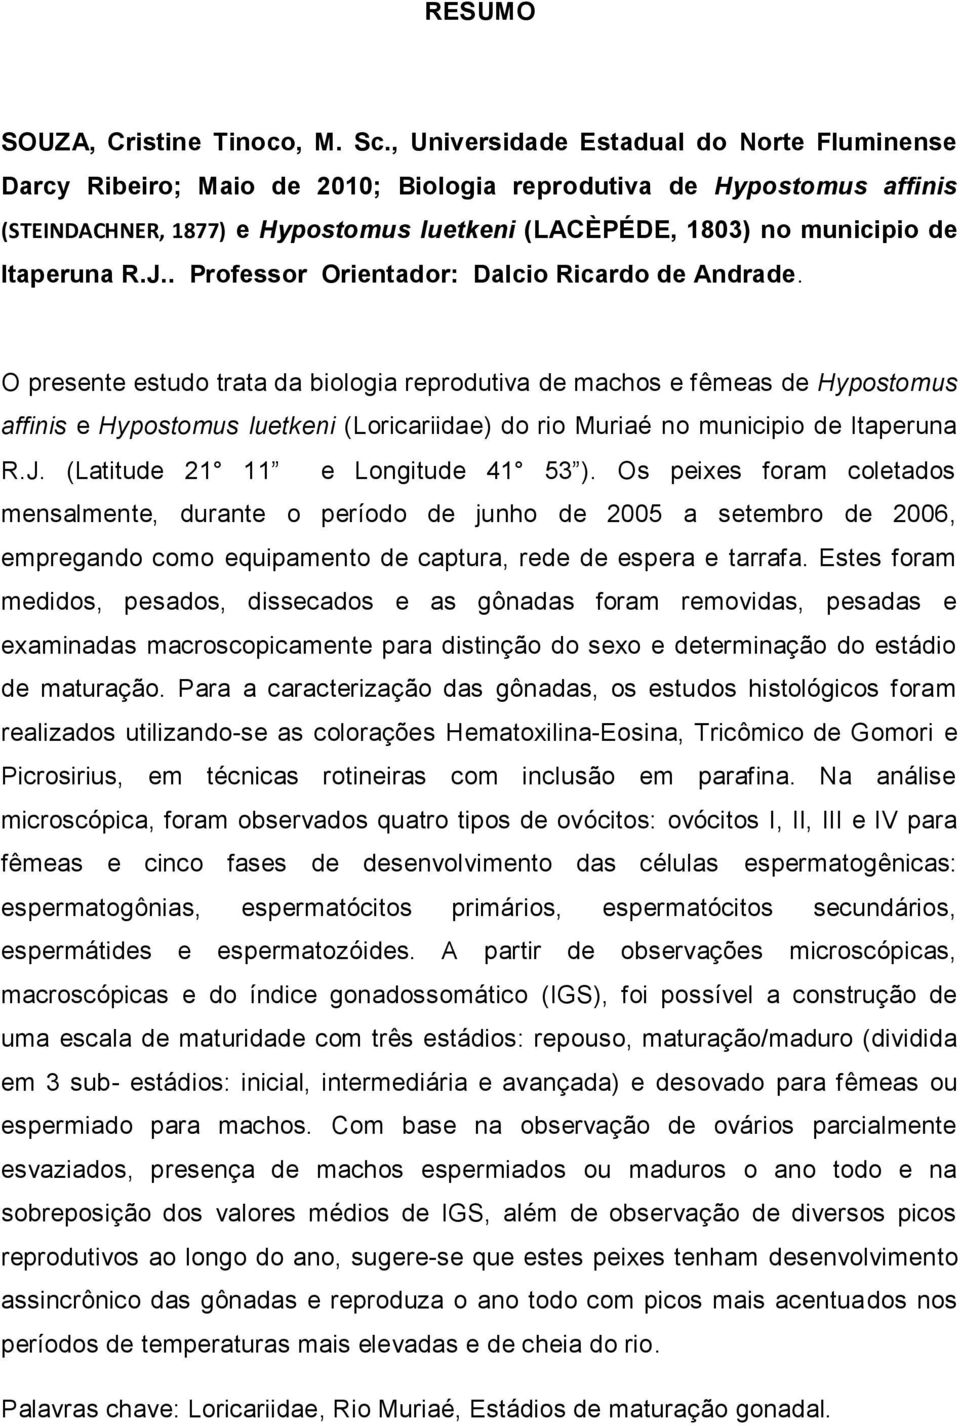 Itaperuna R.J.. Professor Orientador: Dalcio Ricardo de Andrade.